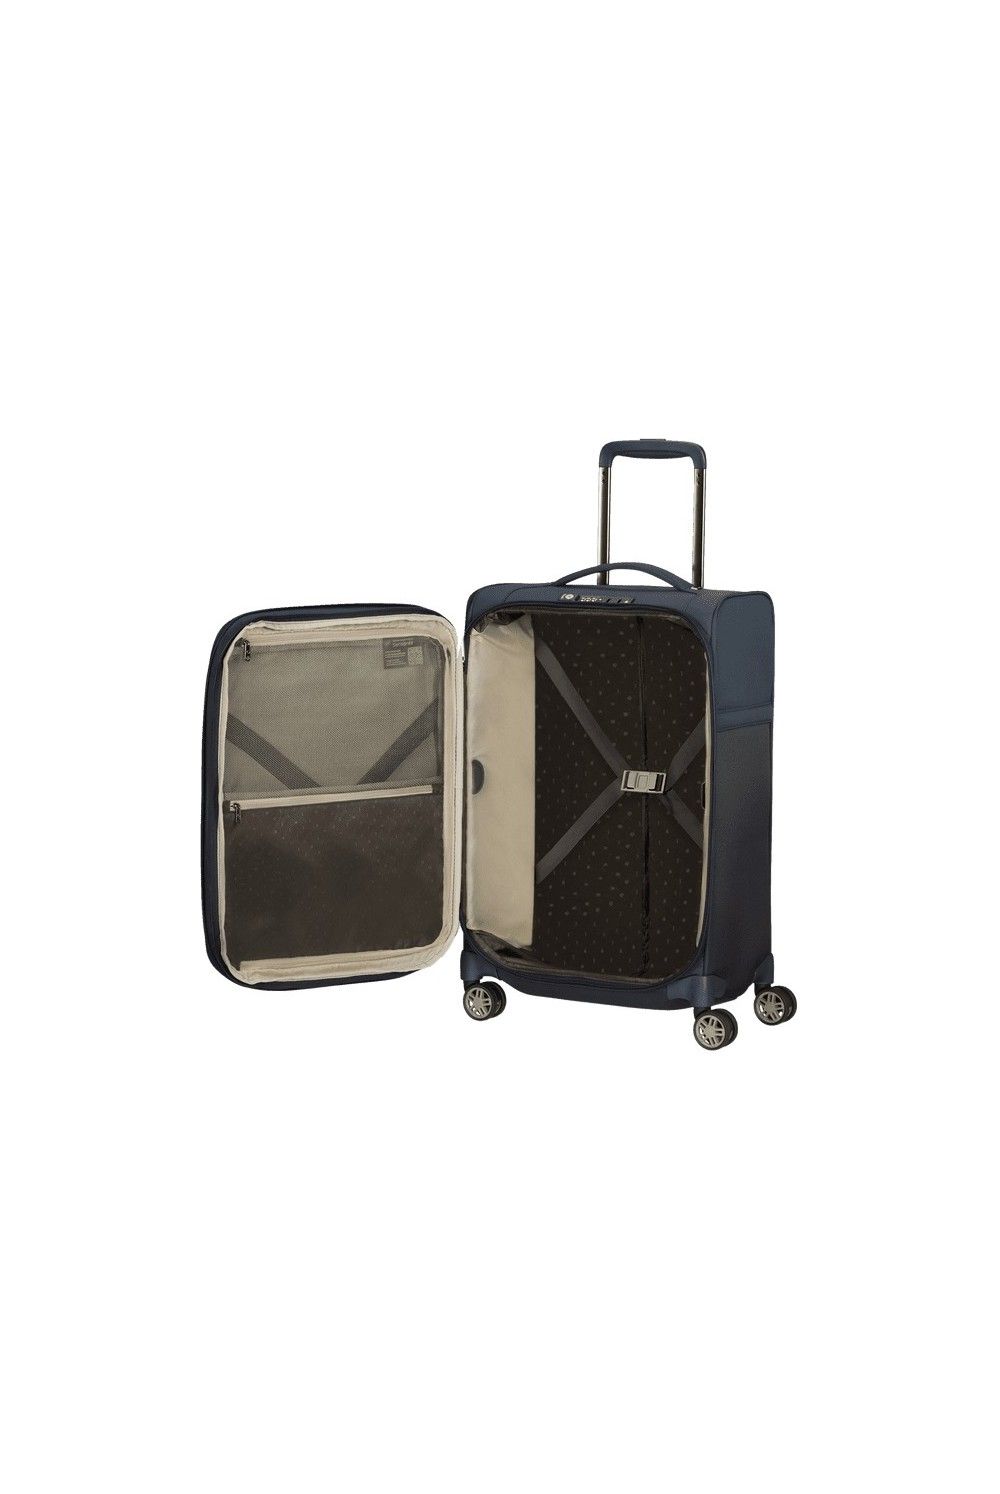 Samsonite Airea 55x35x22-25cm 4 wheel hand luggage